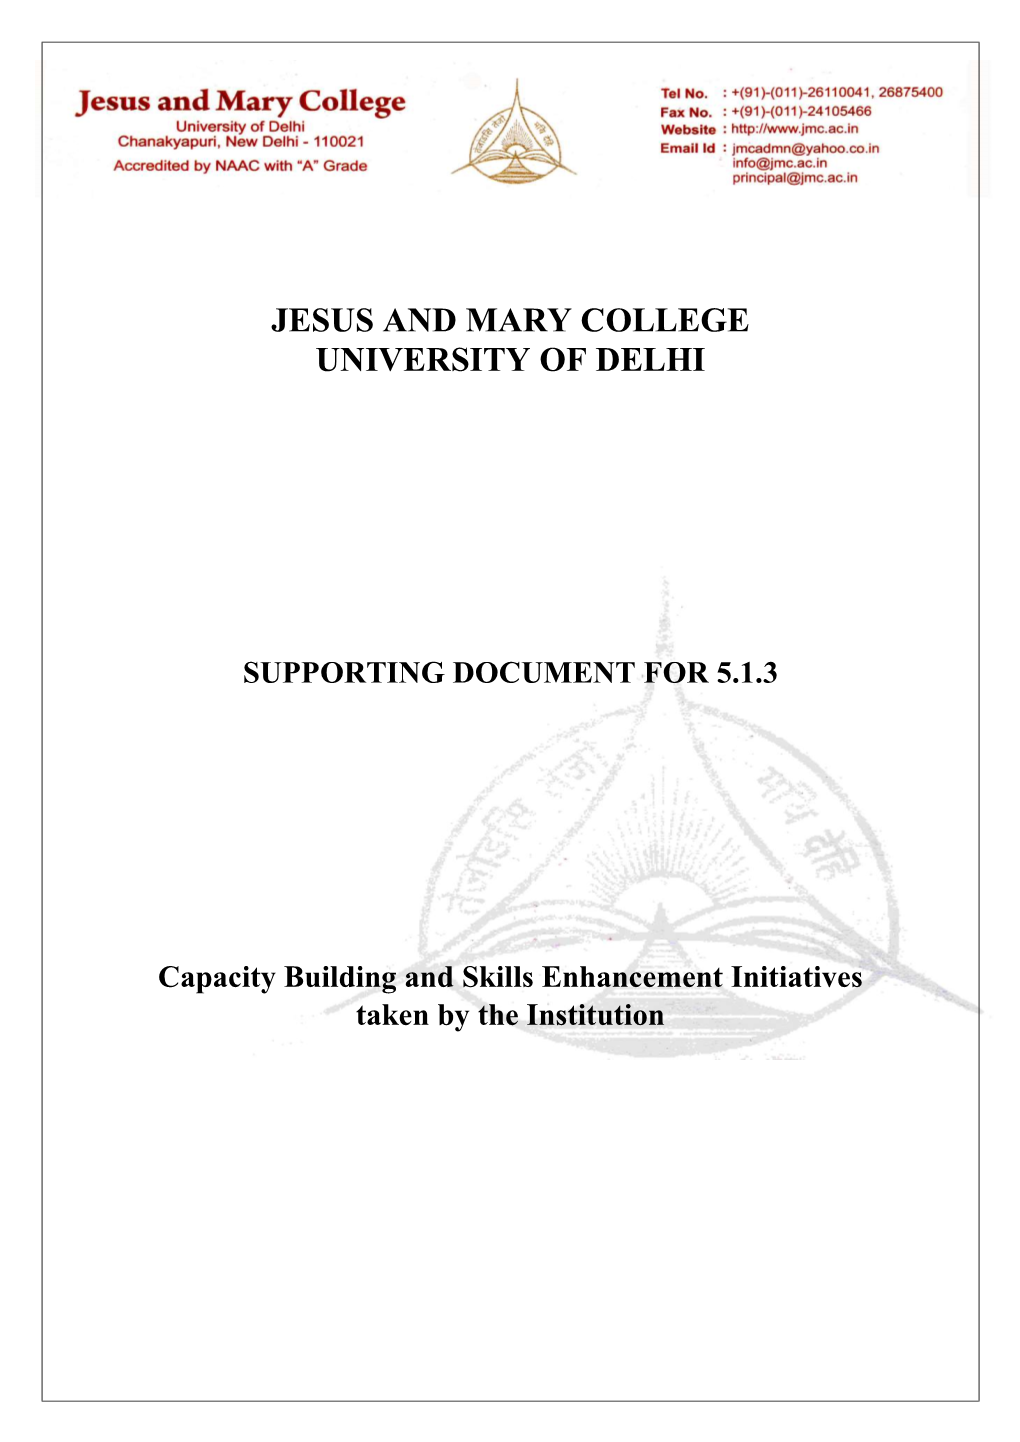 Jesus and Mary College University of Delhi